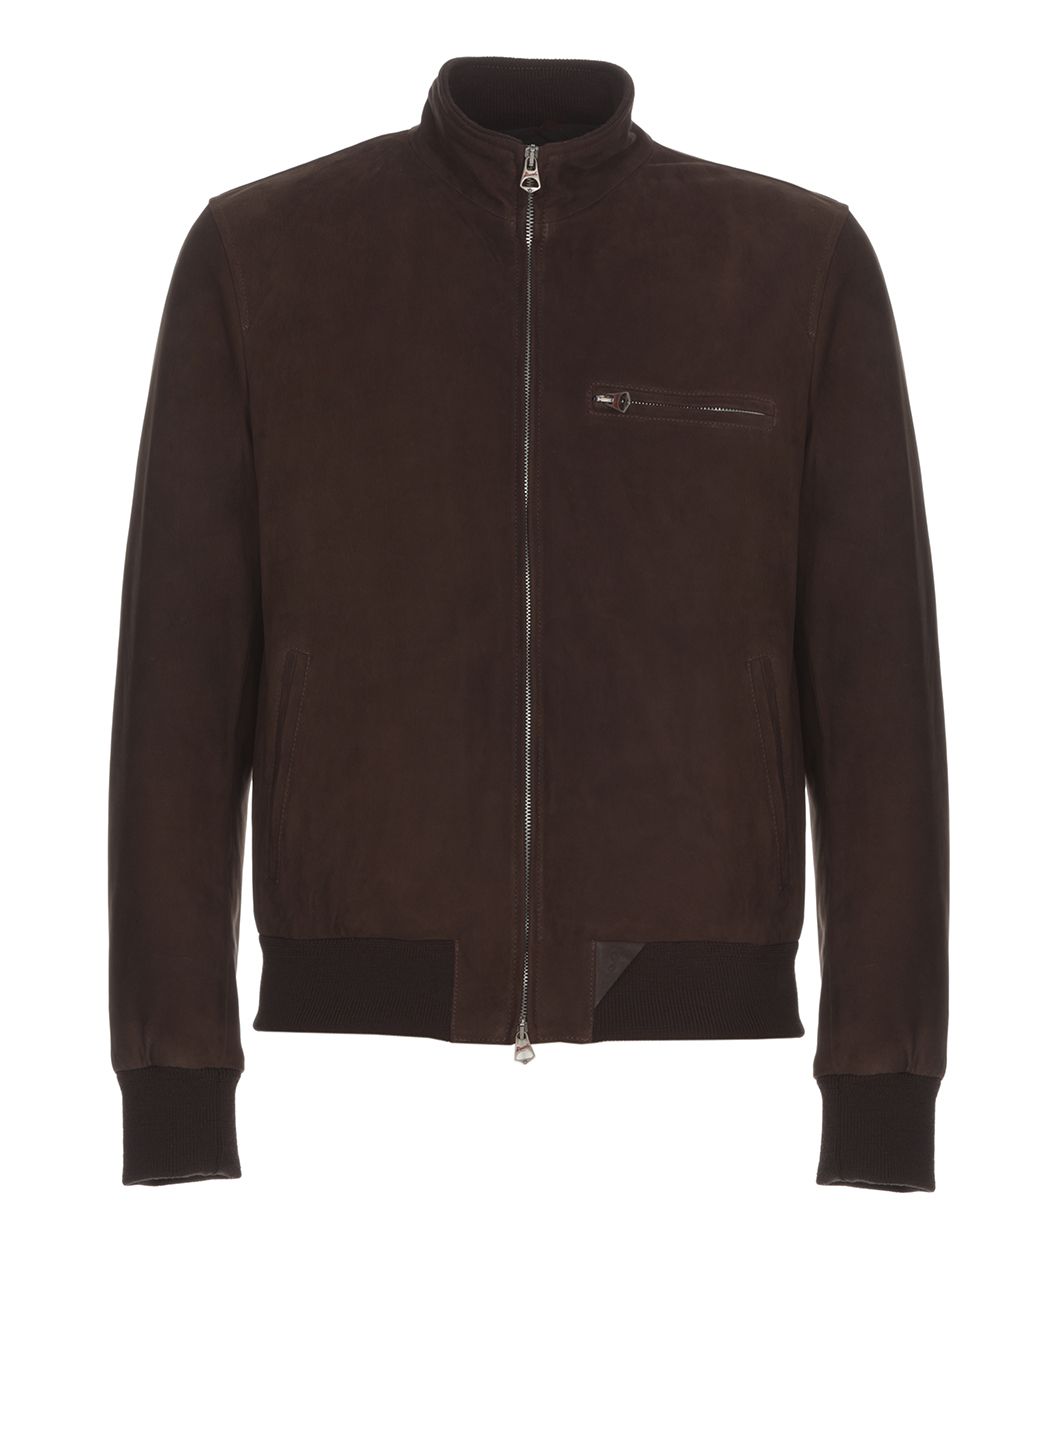 Jonathan Nuv-Nappa leather jacket